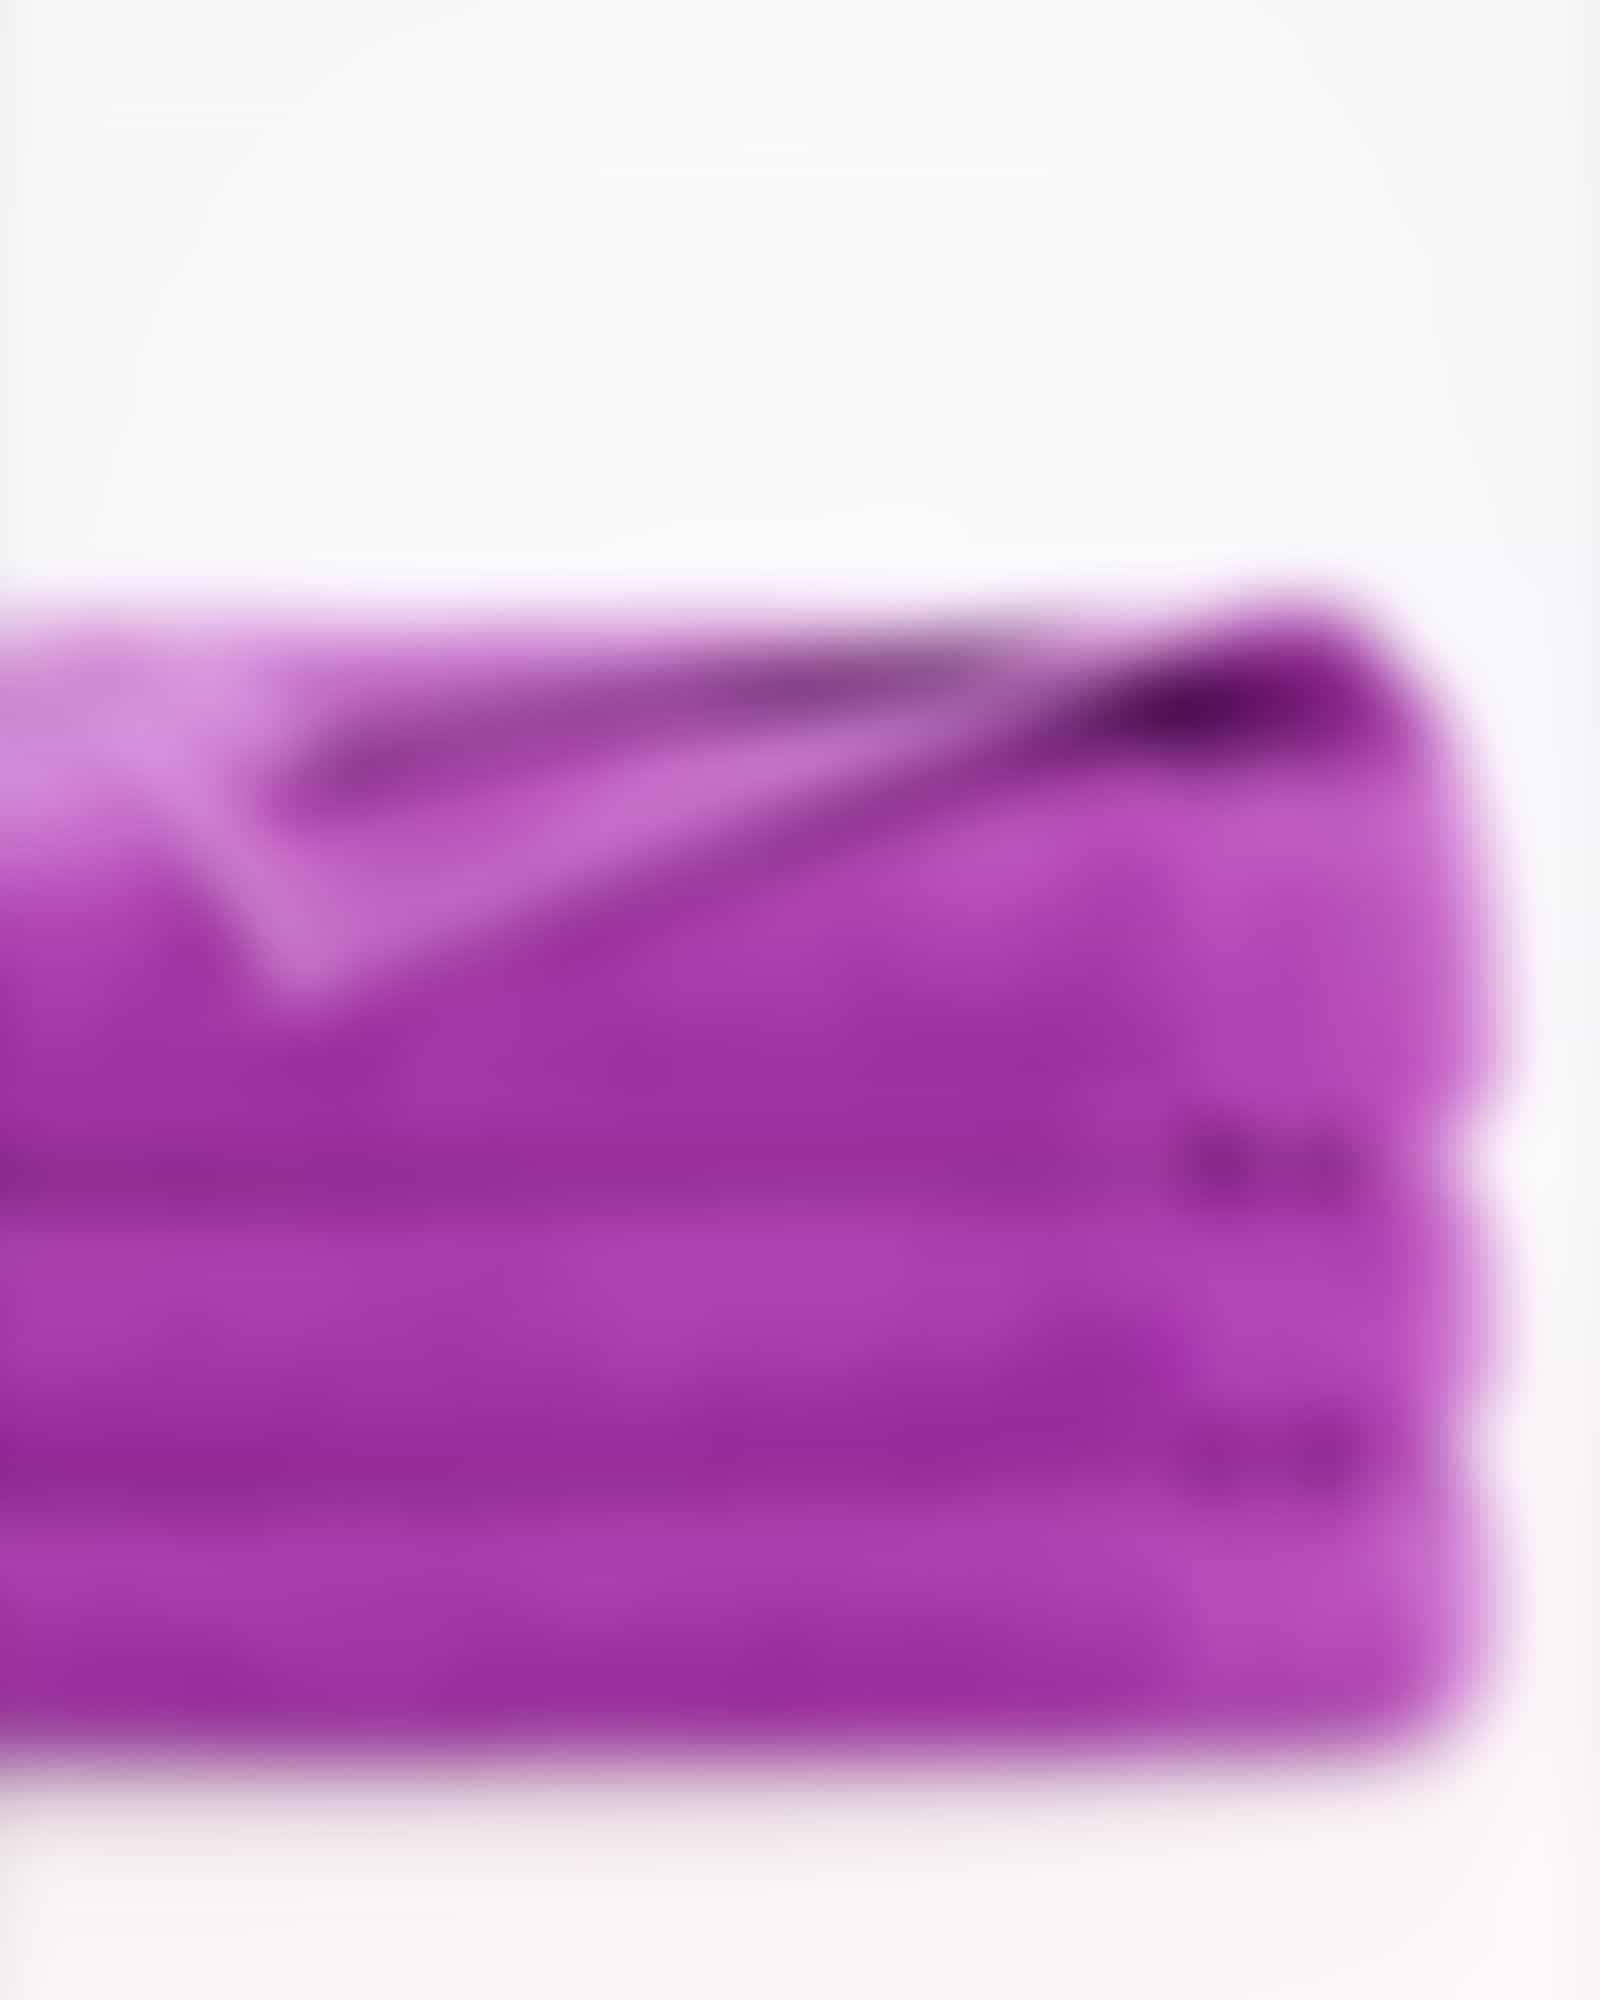 Vossen Handtücher Calypso Feeling - Farbe: lollipop - 8460 - Handtuch 50x100 cm